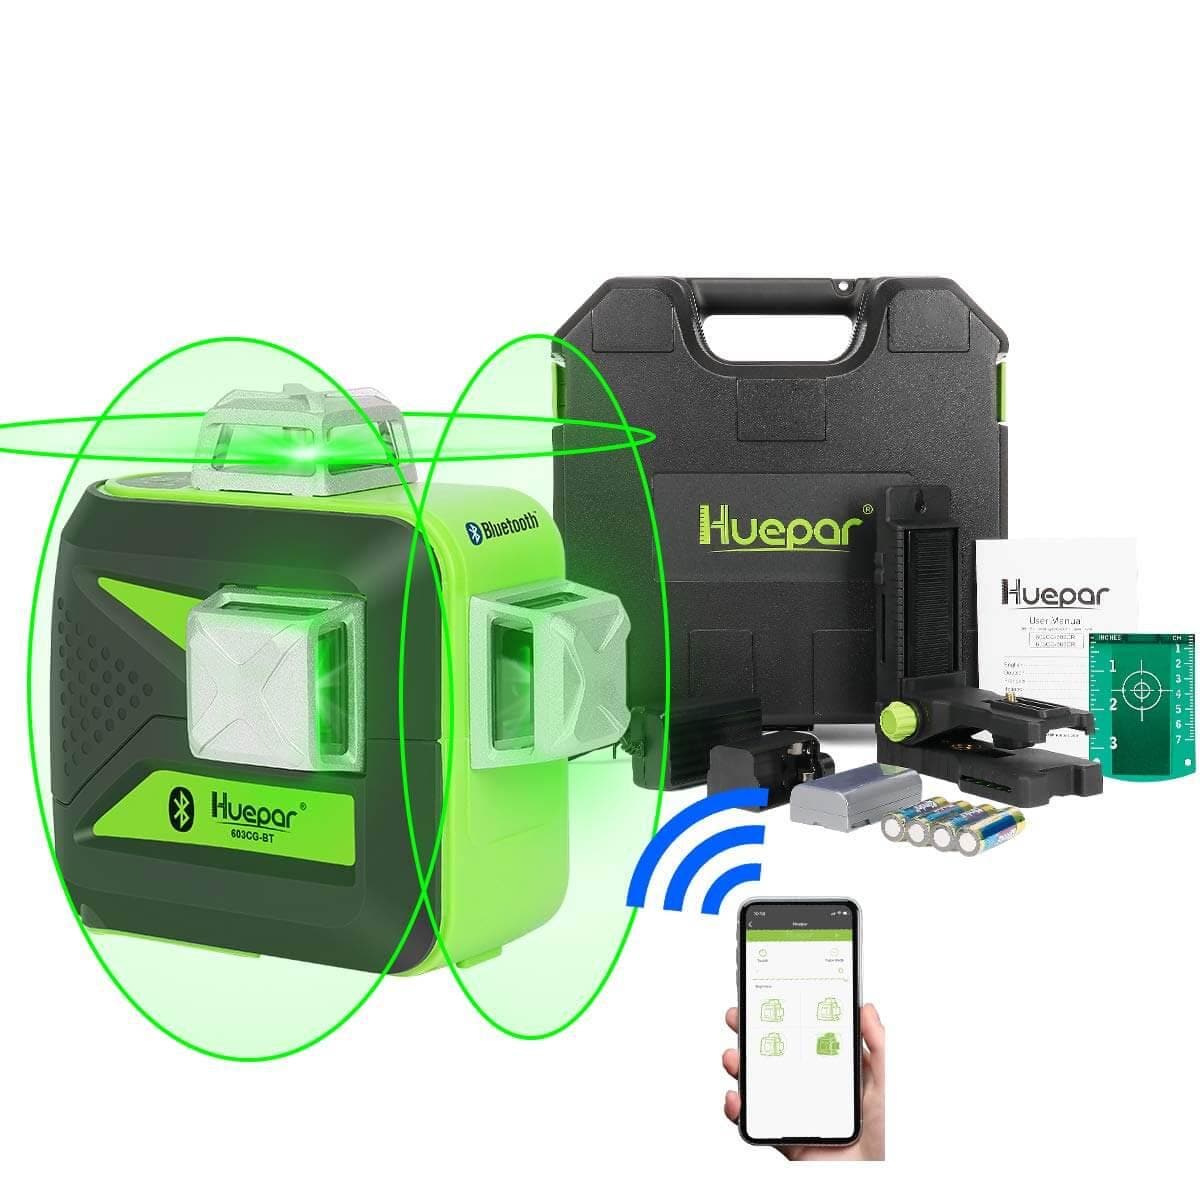 Huepar 603BT-H - Nivel láser autonivelante 3D con haz verde de 3 x 360° con estuche rígido 